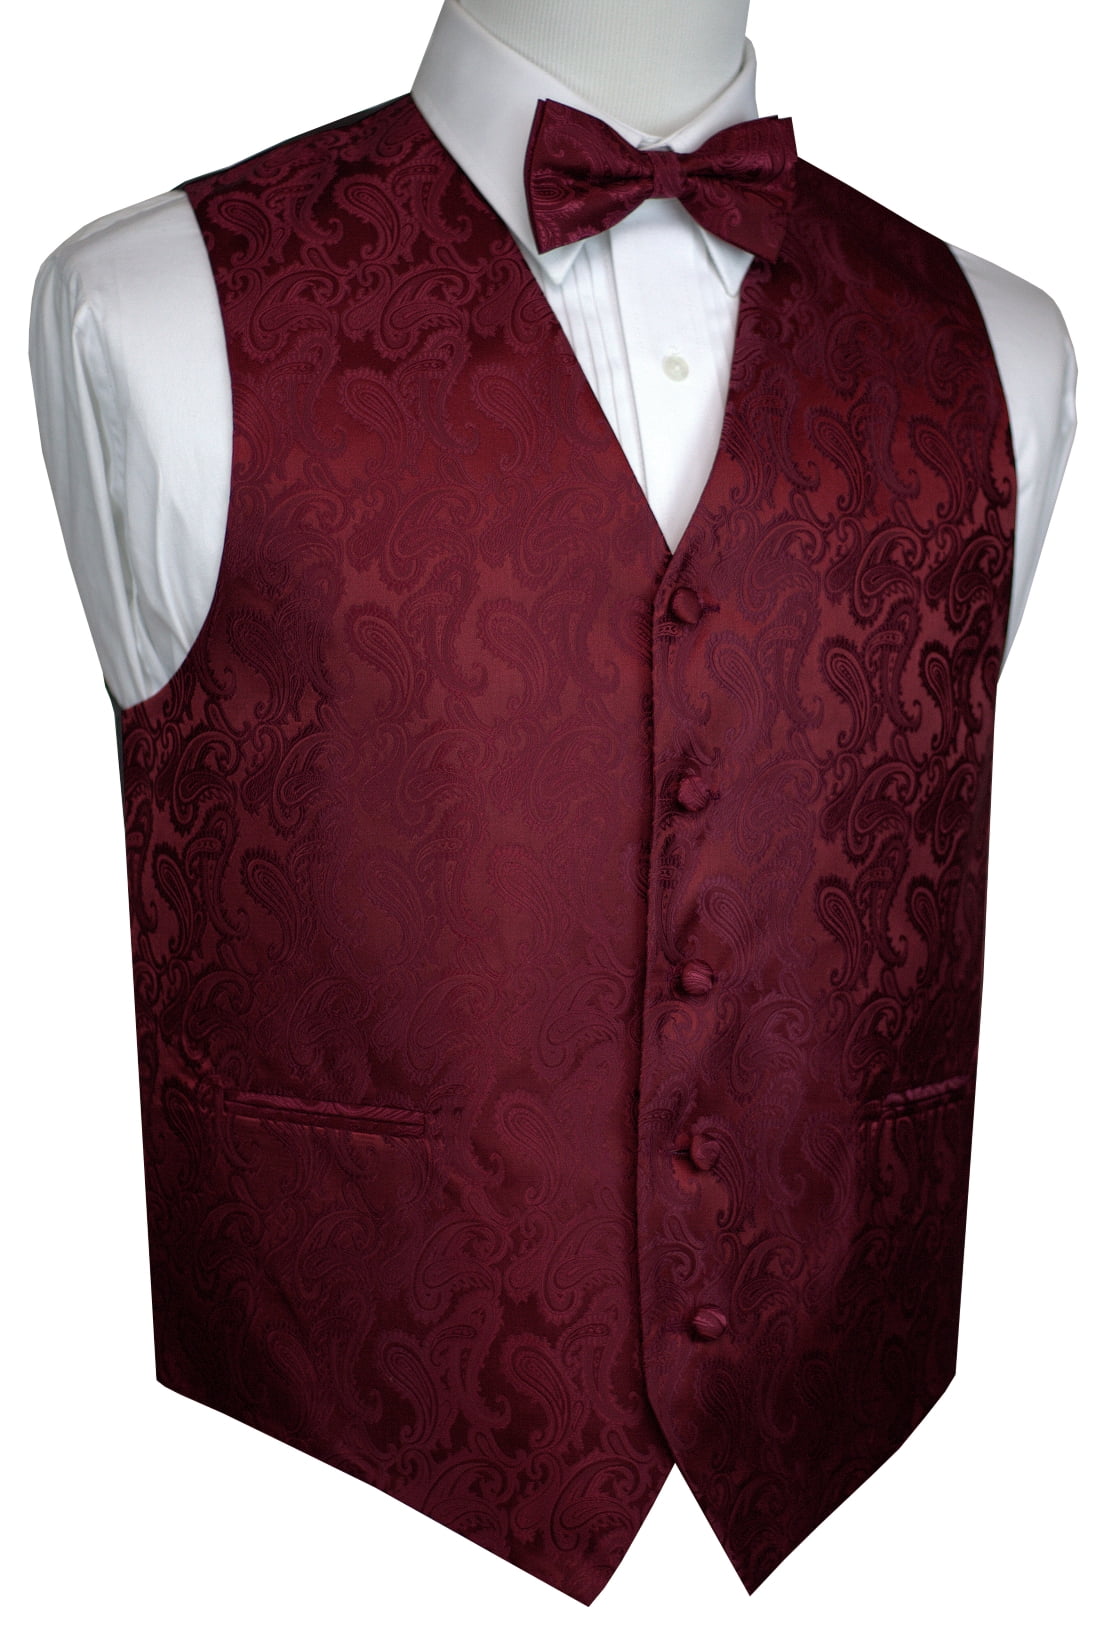 Brand Q - Italian Design, Men's Tuxedo Vest, Bow-tie - Burgundy Paisley ...